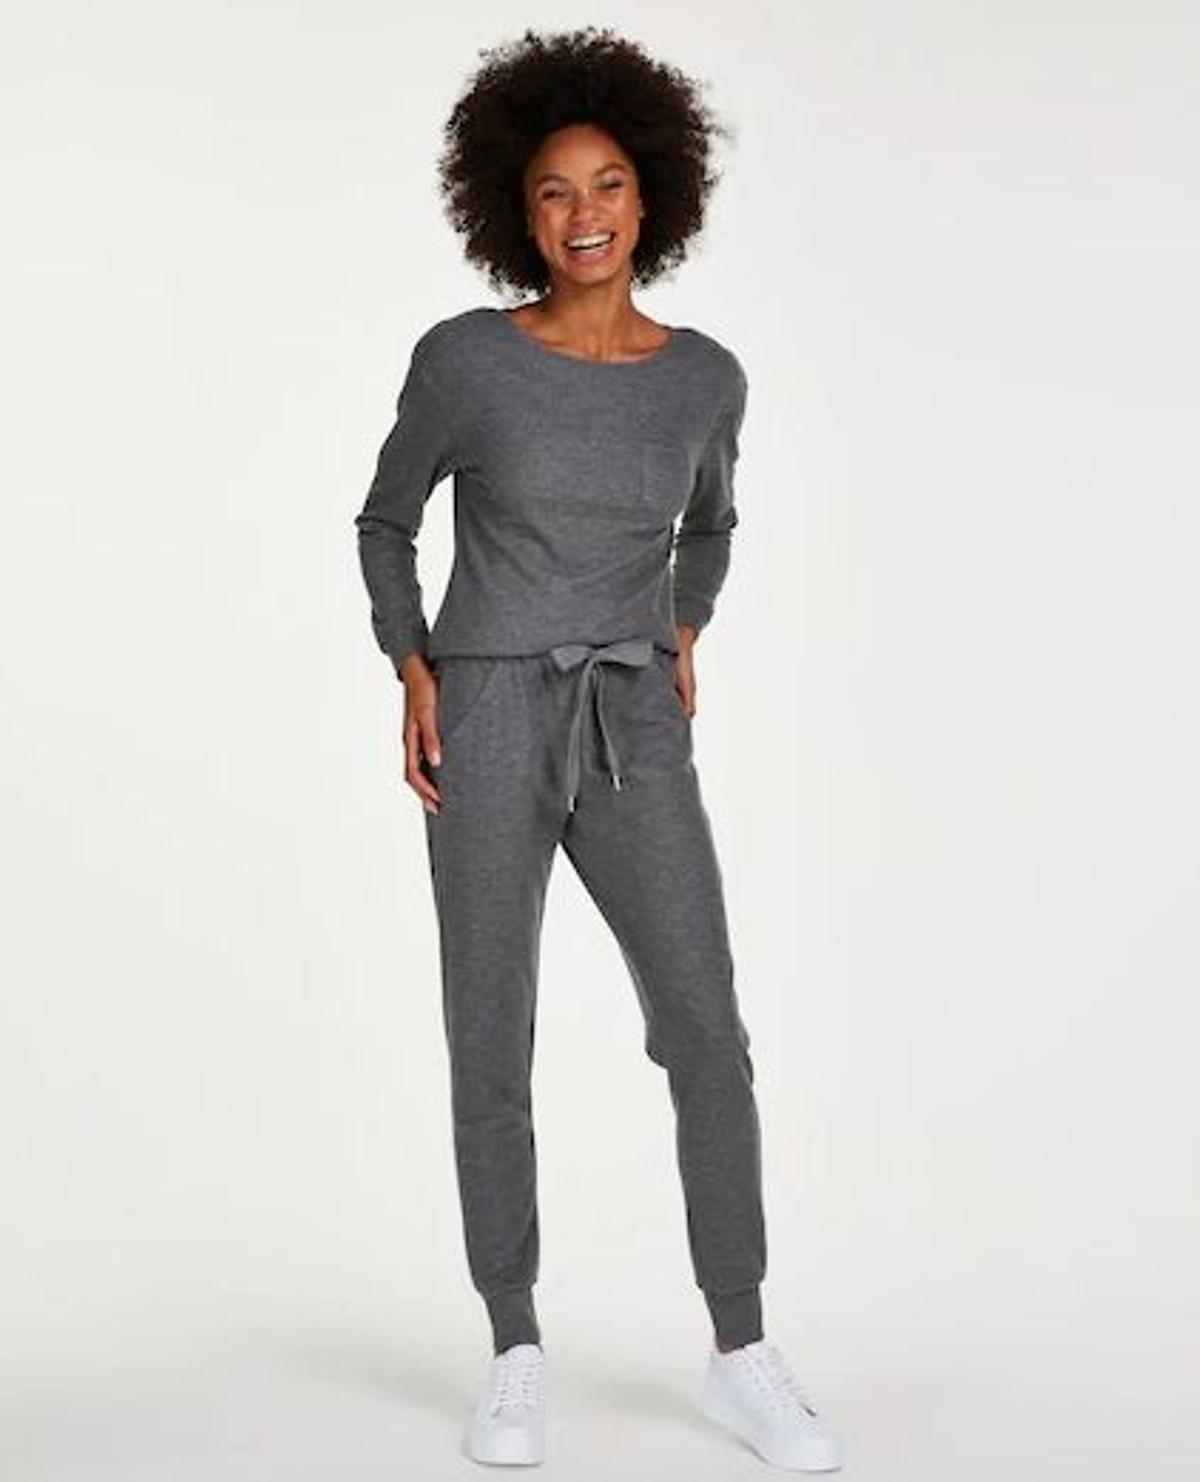 Conjunto de pijama gris jaspeado (Precio: 39,99 euros)